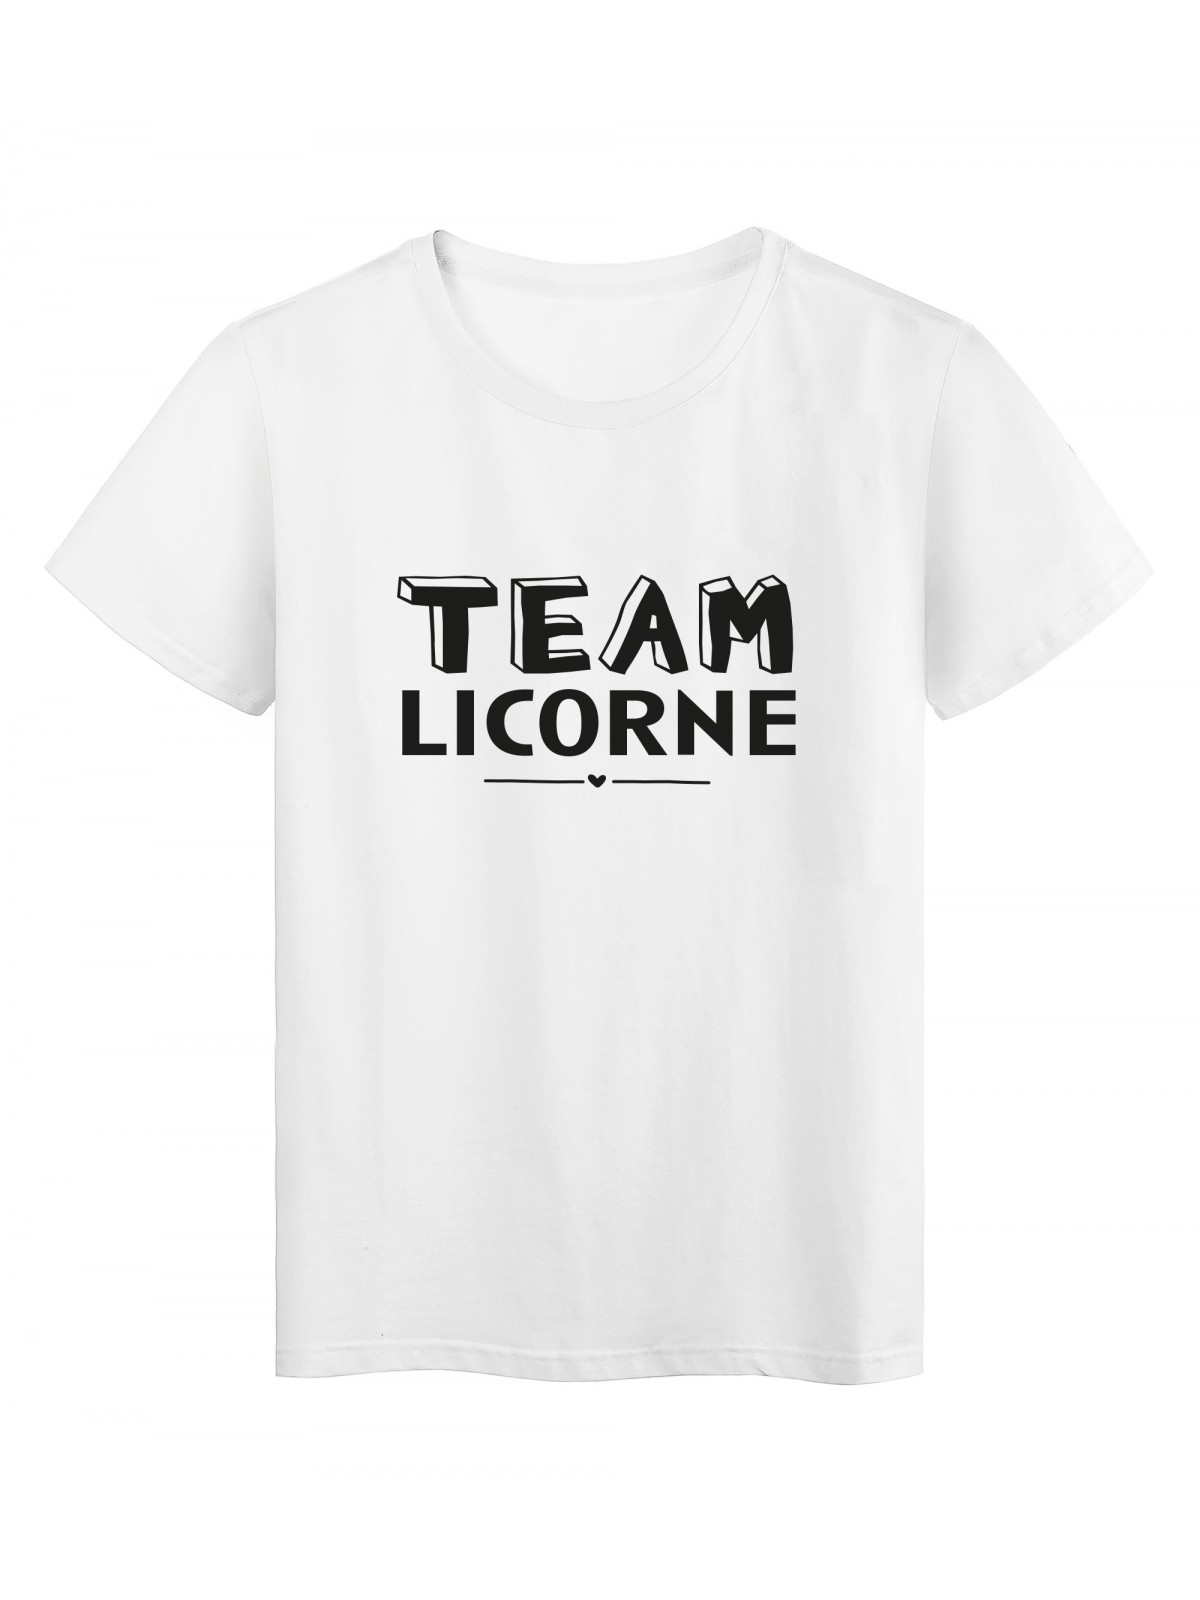 T-Shirt imprimÃ© citation humour Team licorne